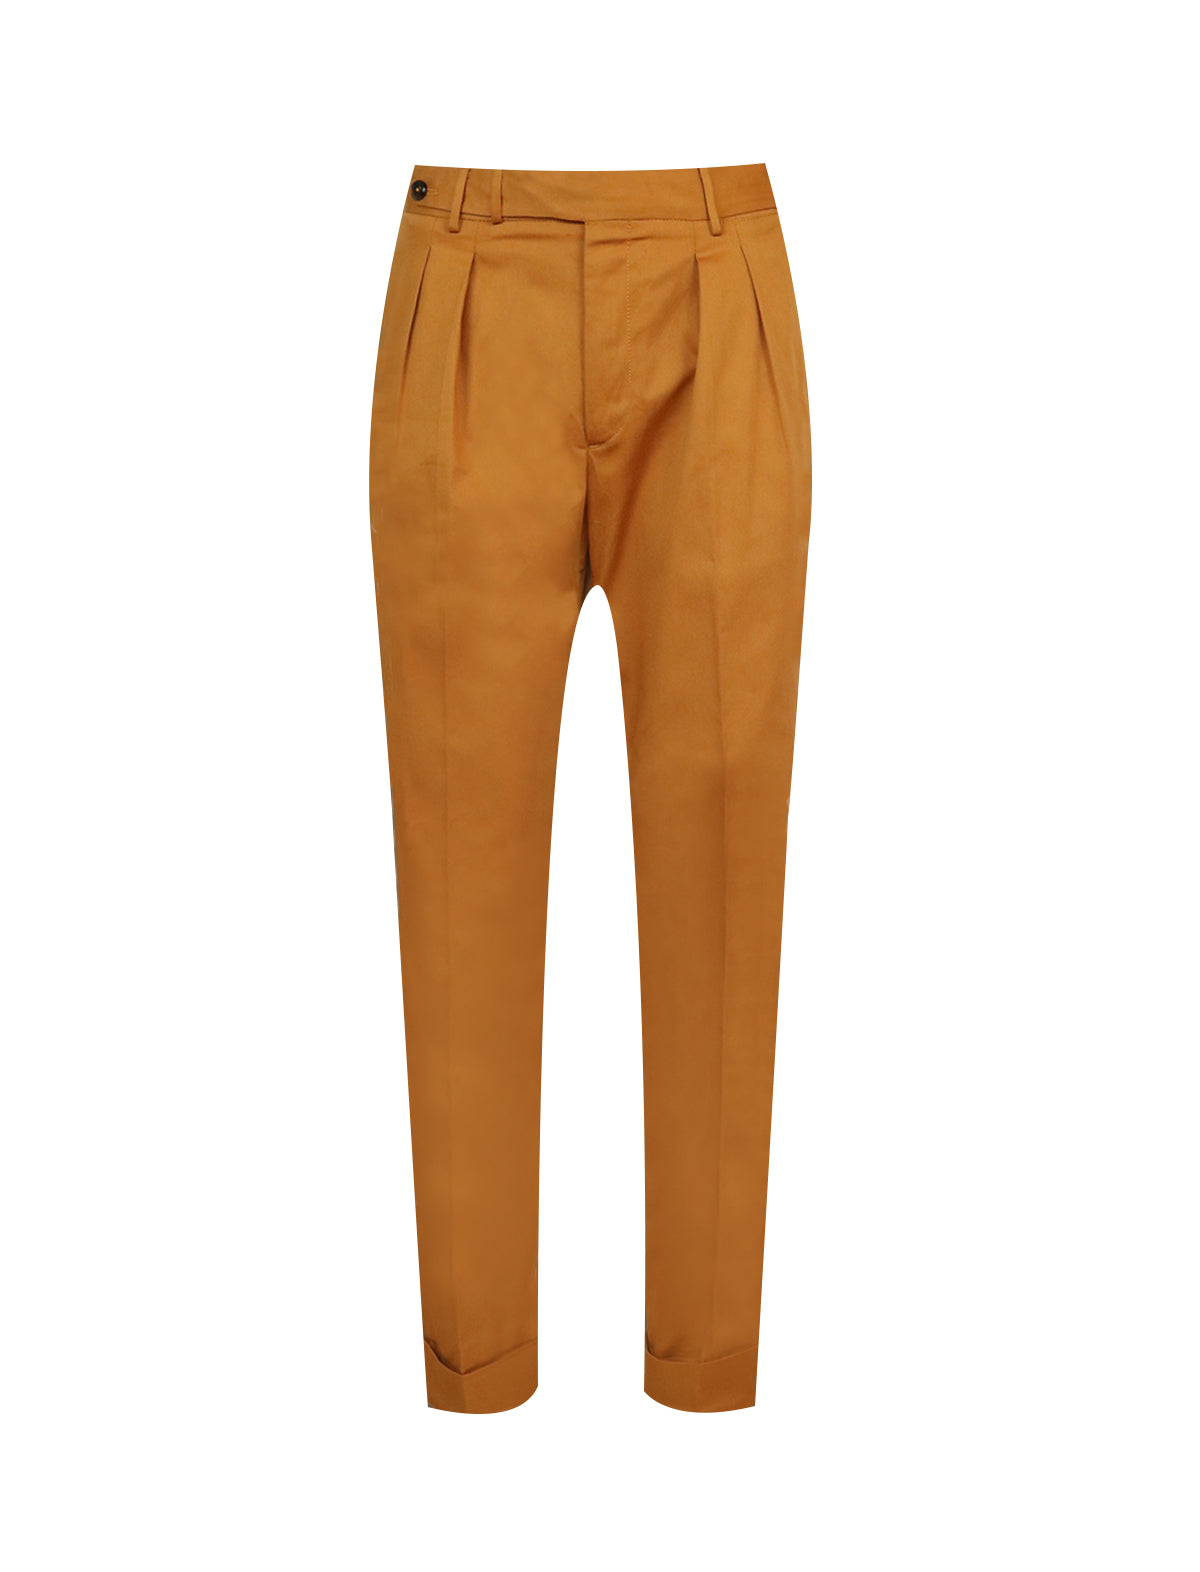 PT Torino Reworked Trouser in Camel Orange